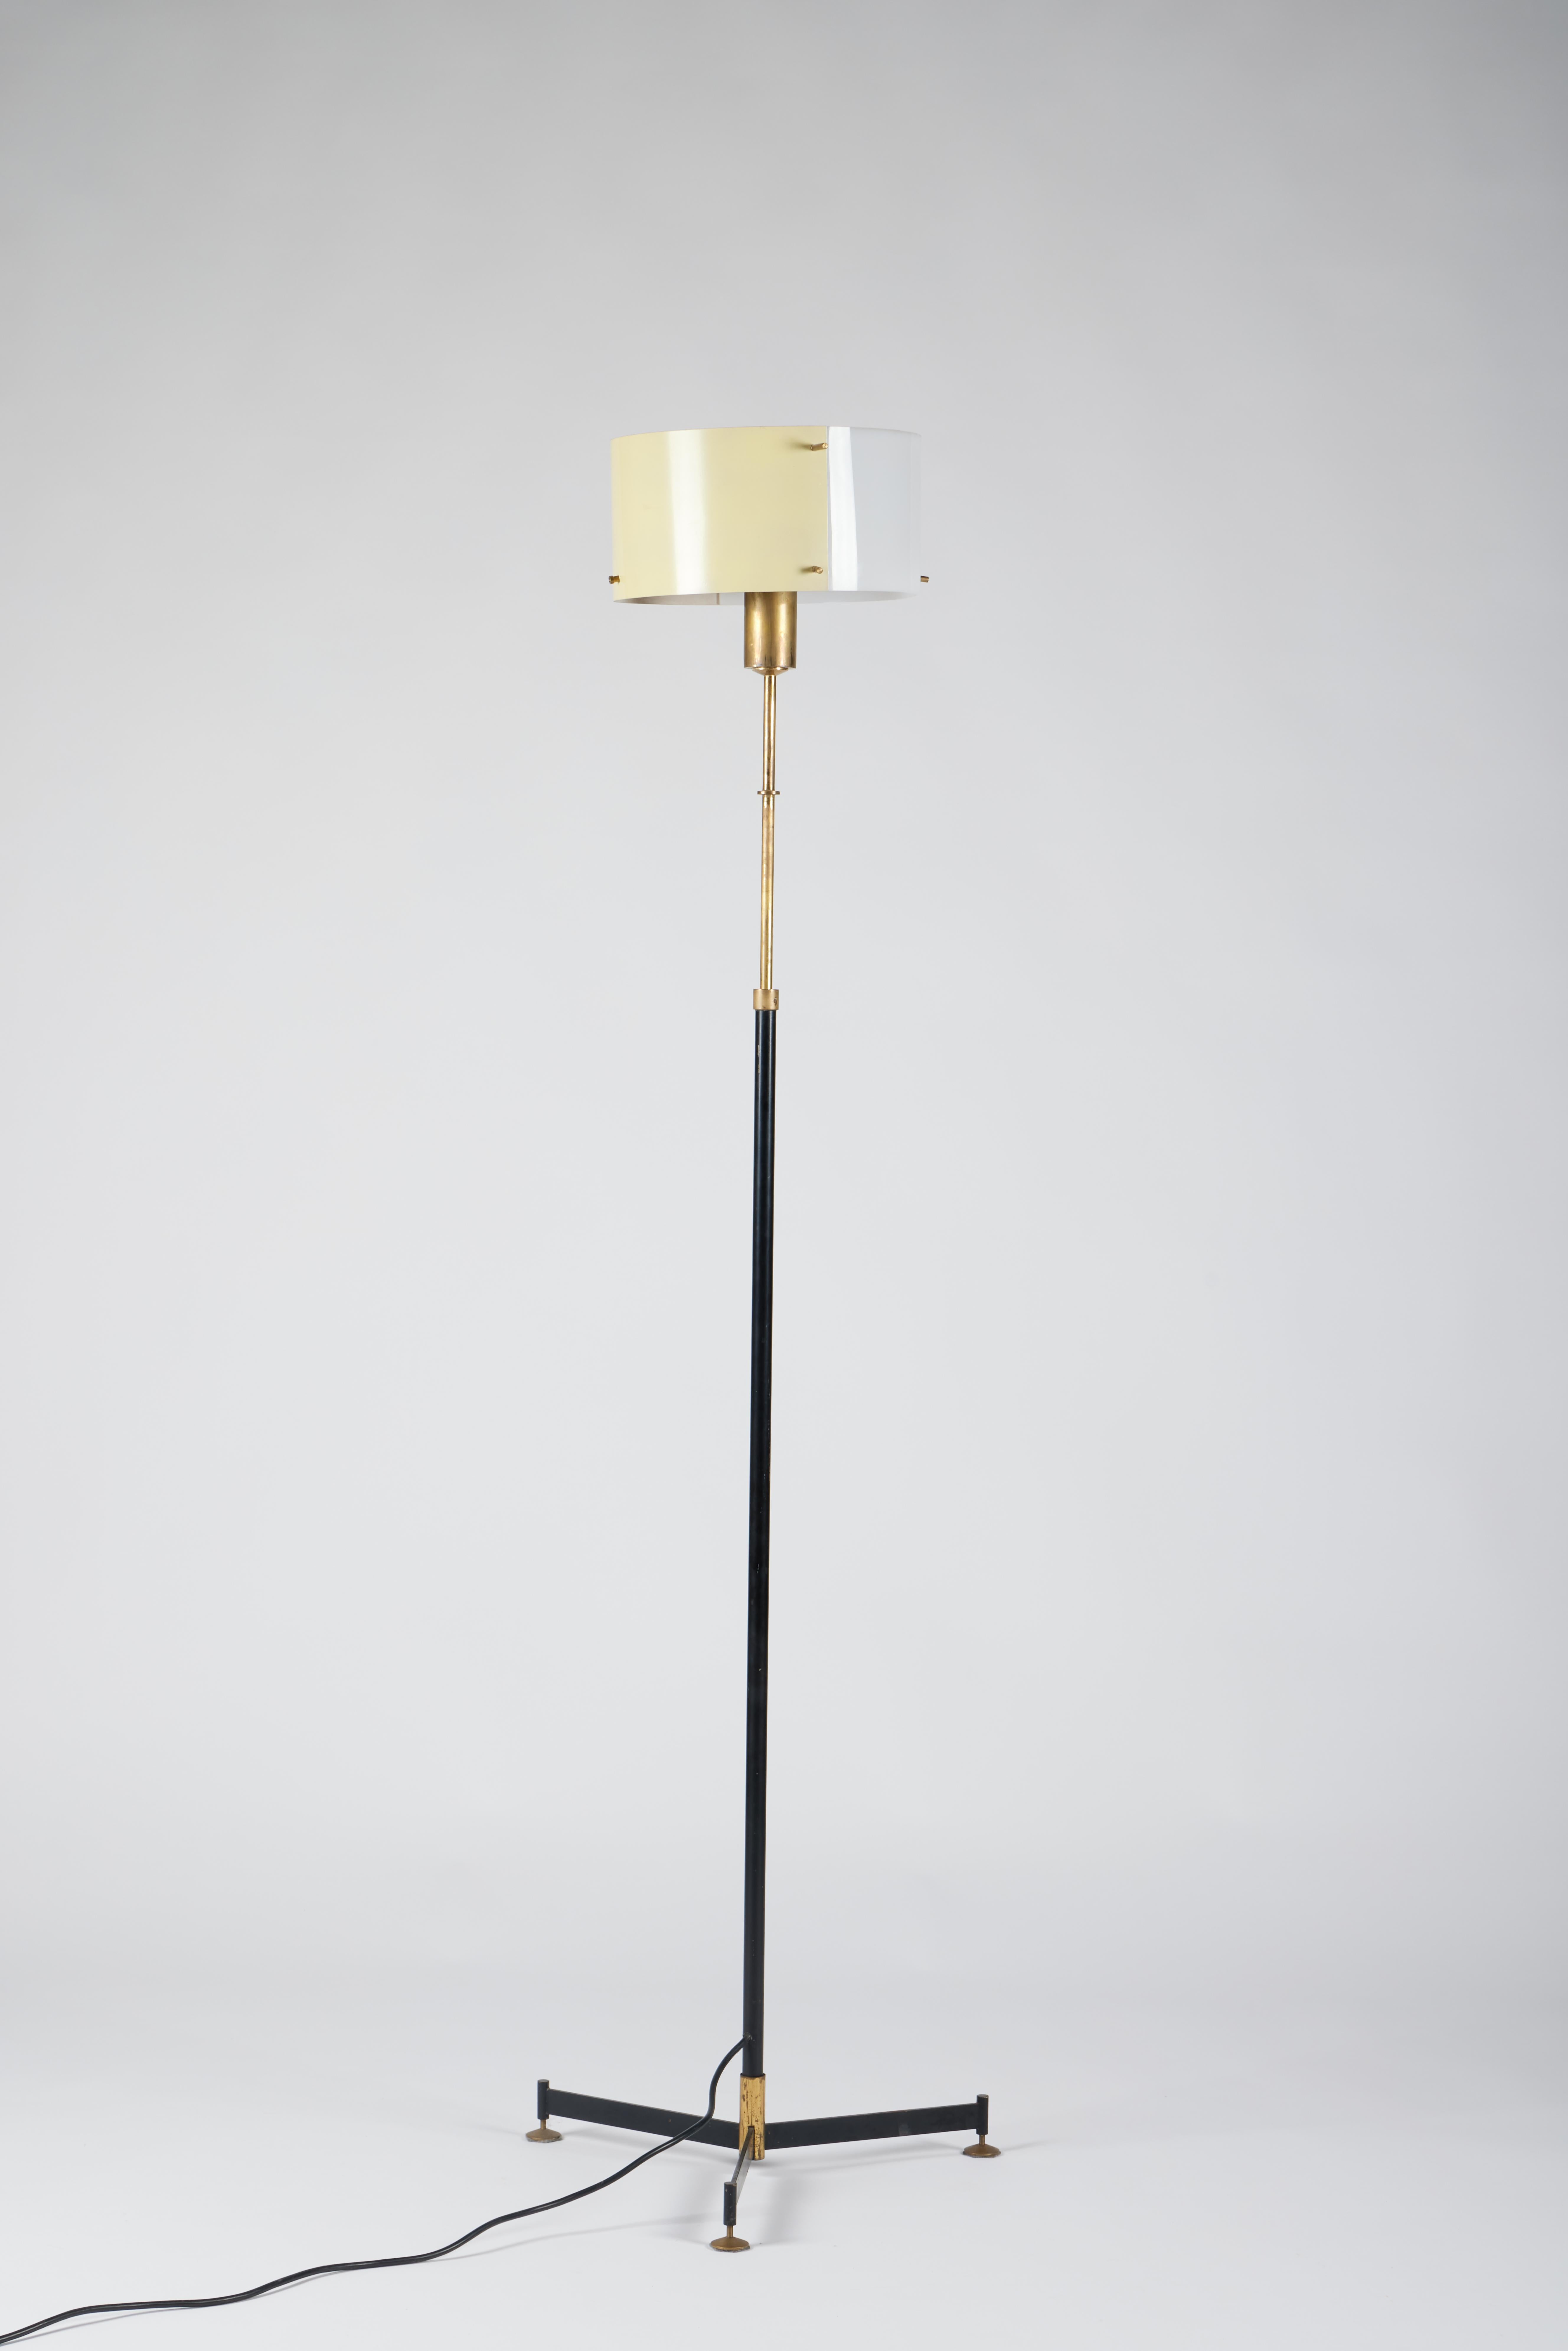 Italian Mid-Century, Modern Floor Lamp with Adjustable Height by Stilnovo, 1950s For Sale 1